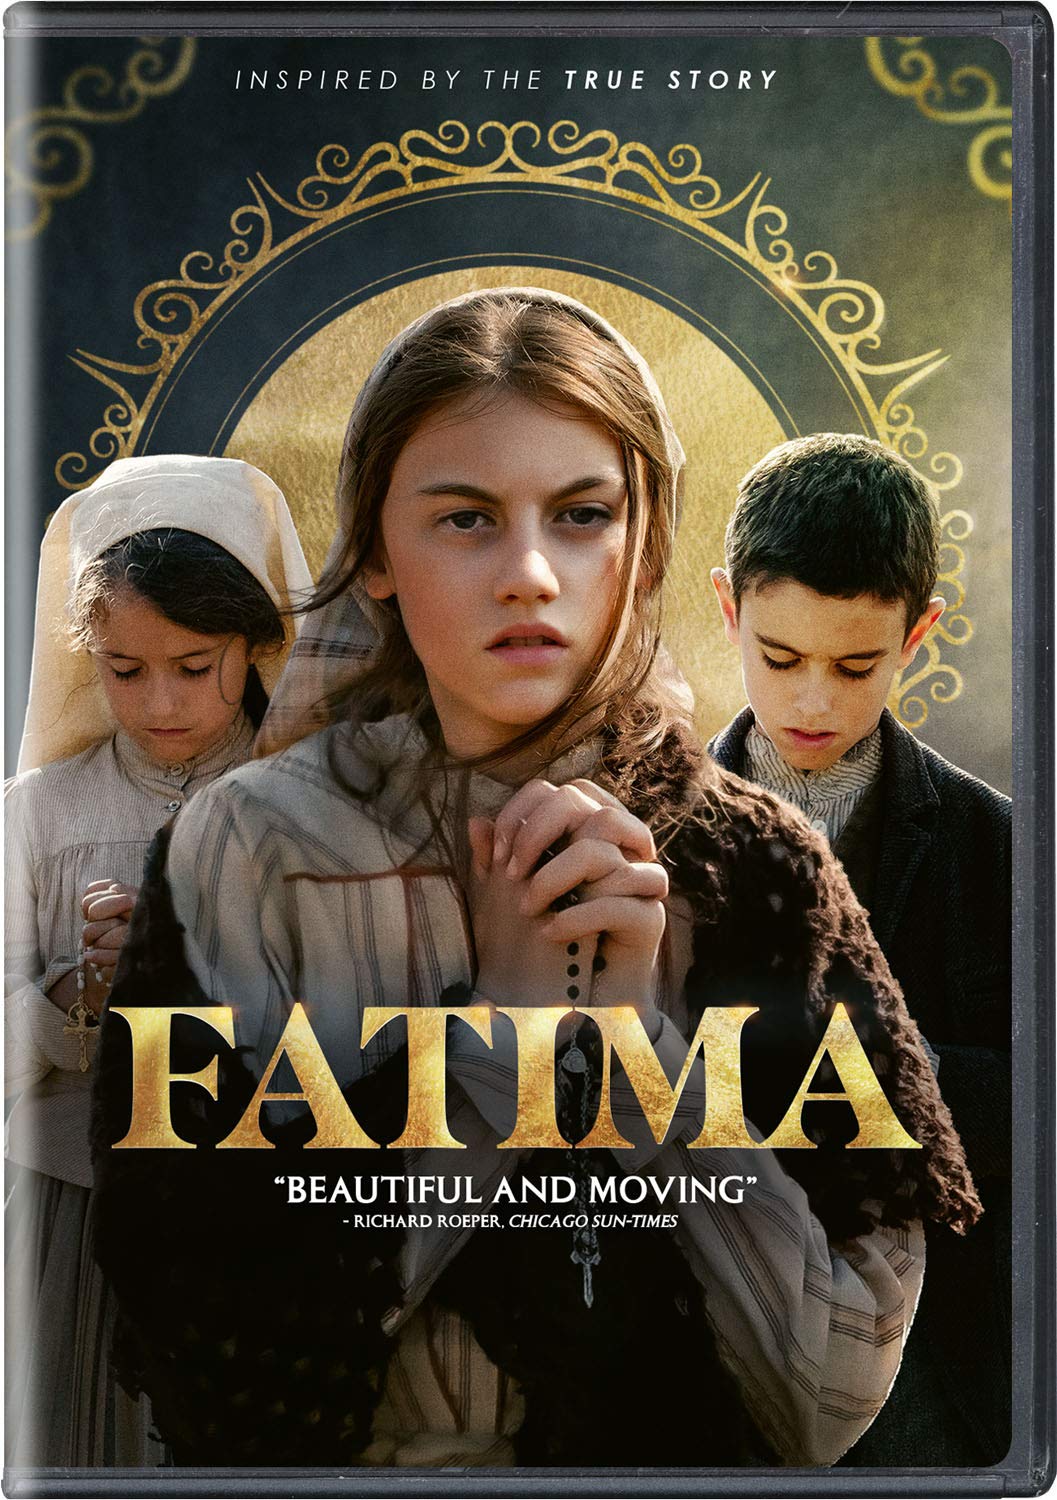 Fatima DVD Cover